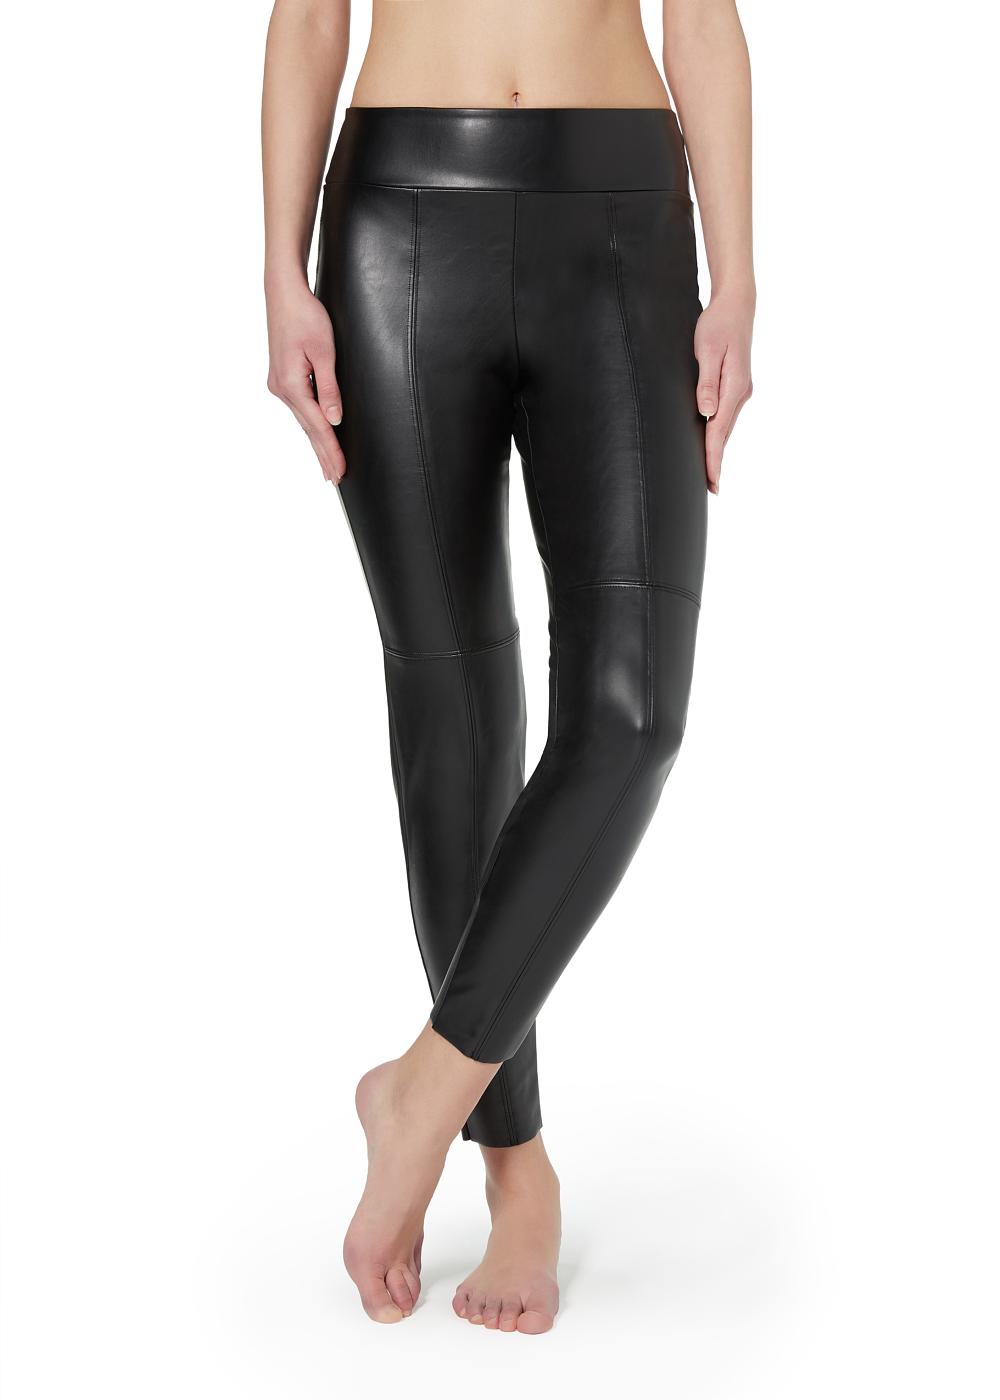 Calzedonia Total shaper thermal leather effect leggings